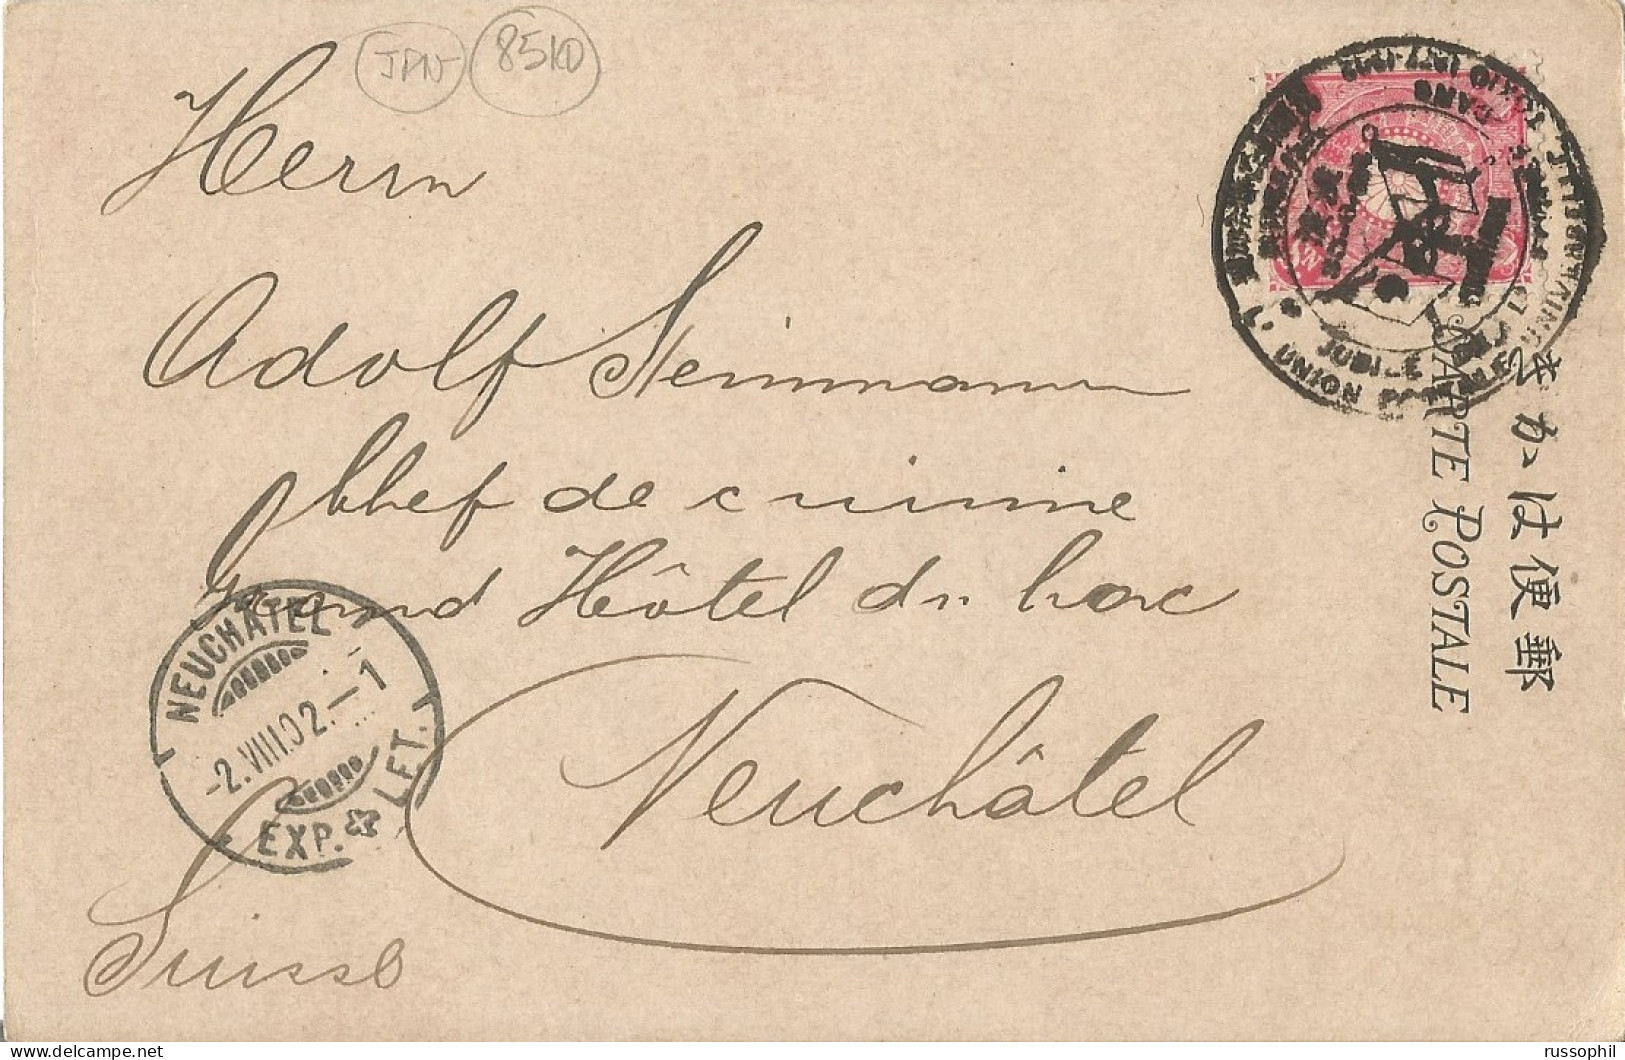 JAPON - UNION POSTALE UNIVERSELLE TOKIO 1877 1902 - (ANCIEN LOCAL DE LA DIETE) - FROM YOKOHAMA TO SWITZERLAND -1902  - Lettres & Documents